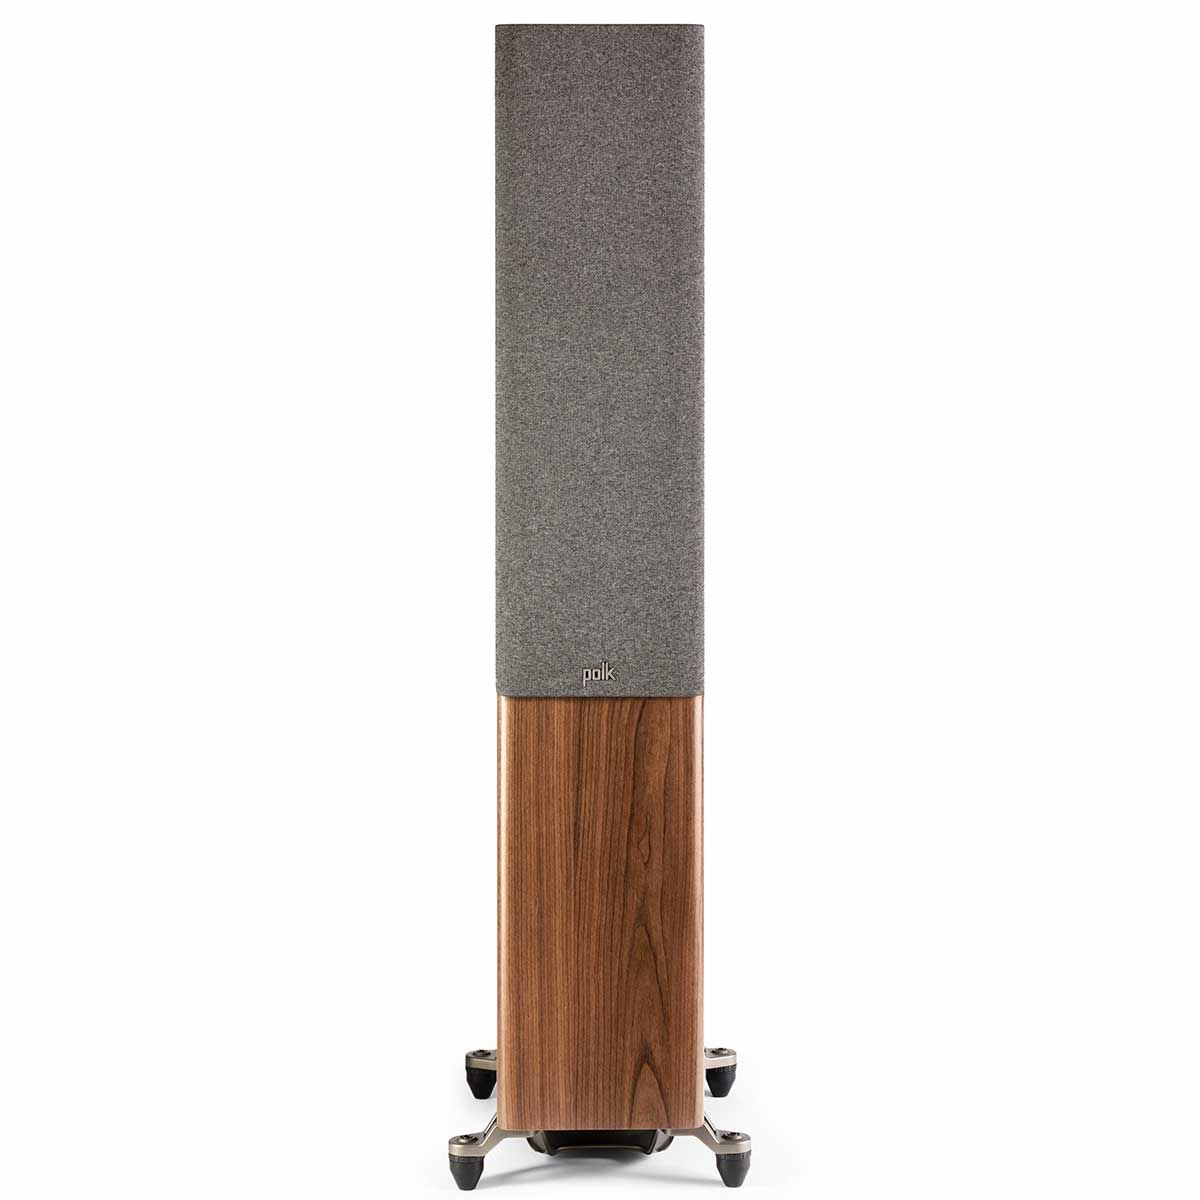 Polk R600 Floorstanding Speaker, Walnut, front with grille